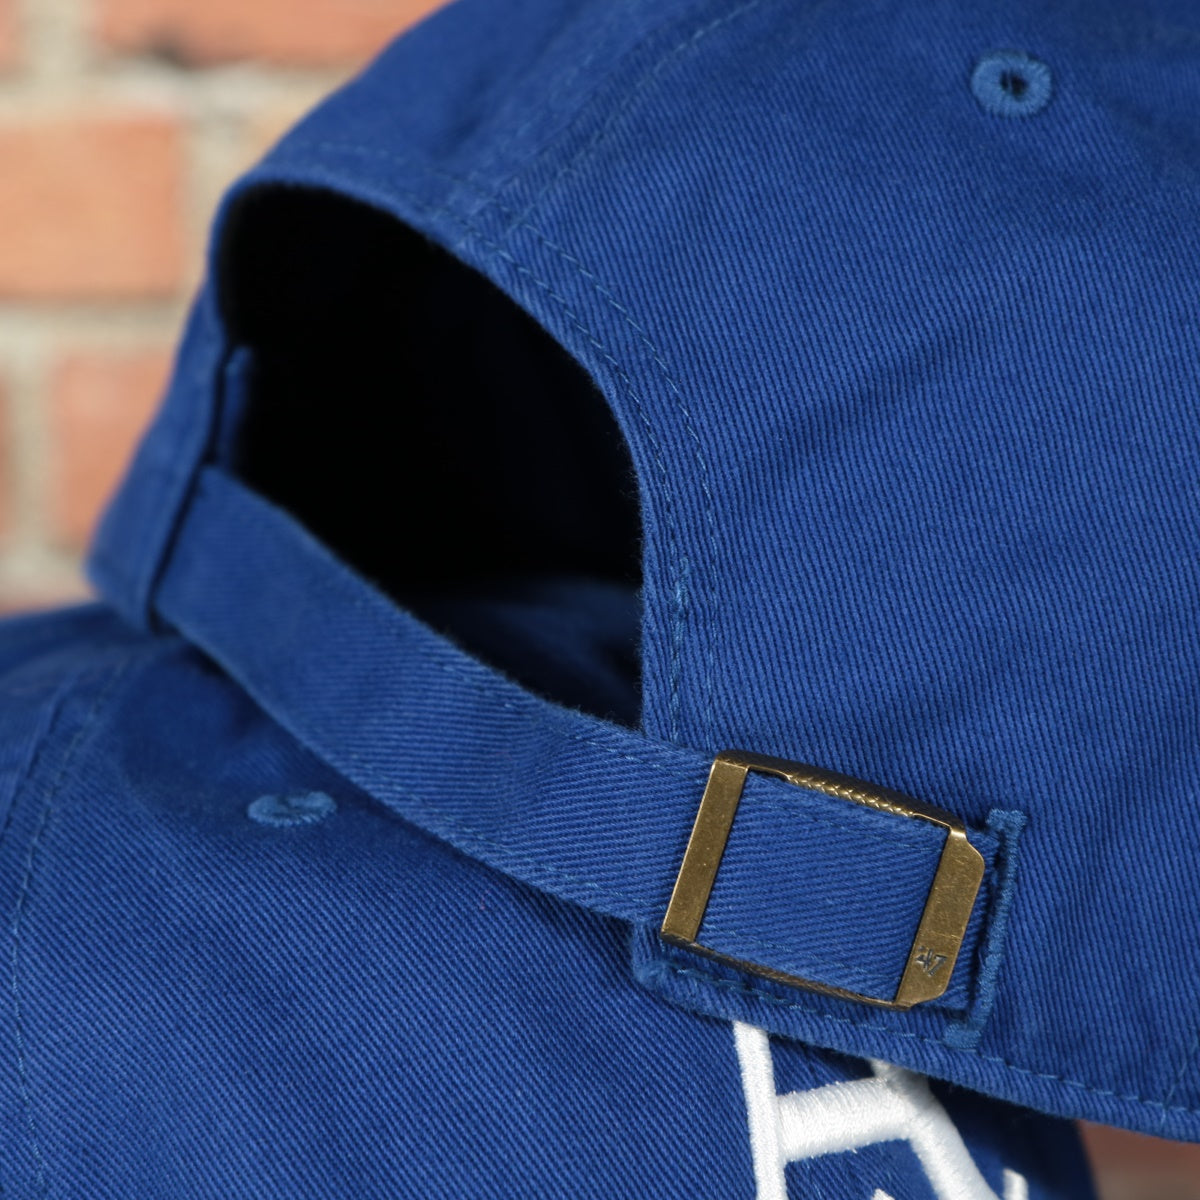 adjustable strap on the Philadelphia Athletics 1928 A Logo Retro Royal Blue Vintage MLB Cooperstown Dad Hat